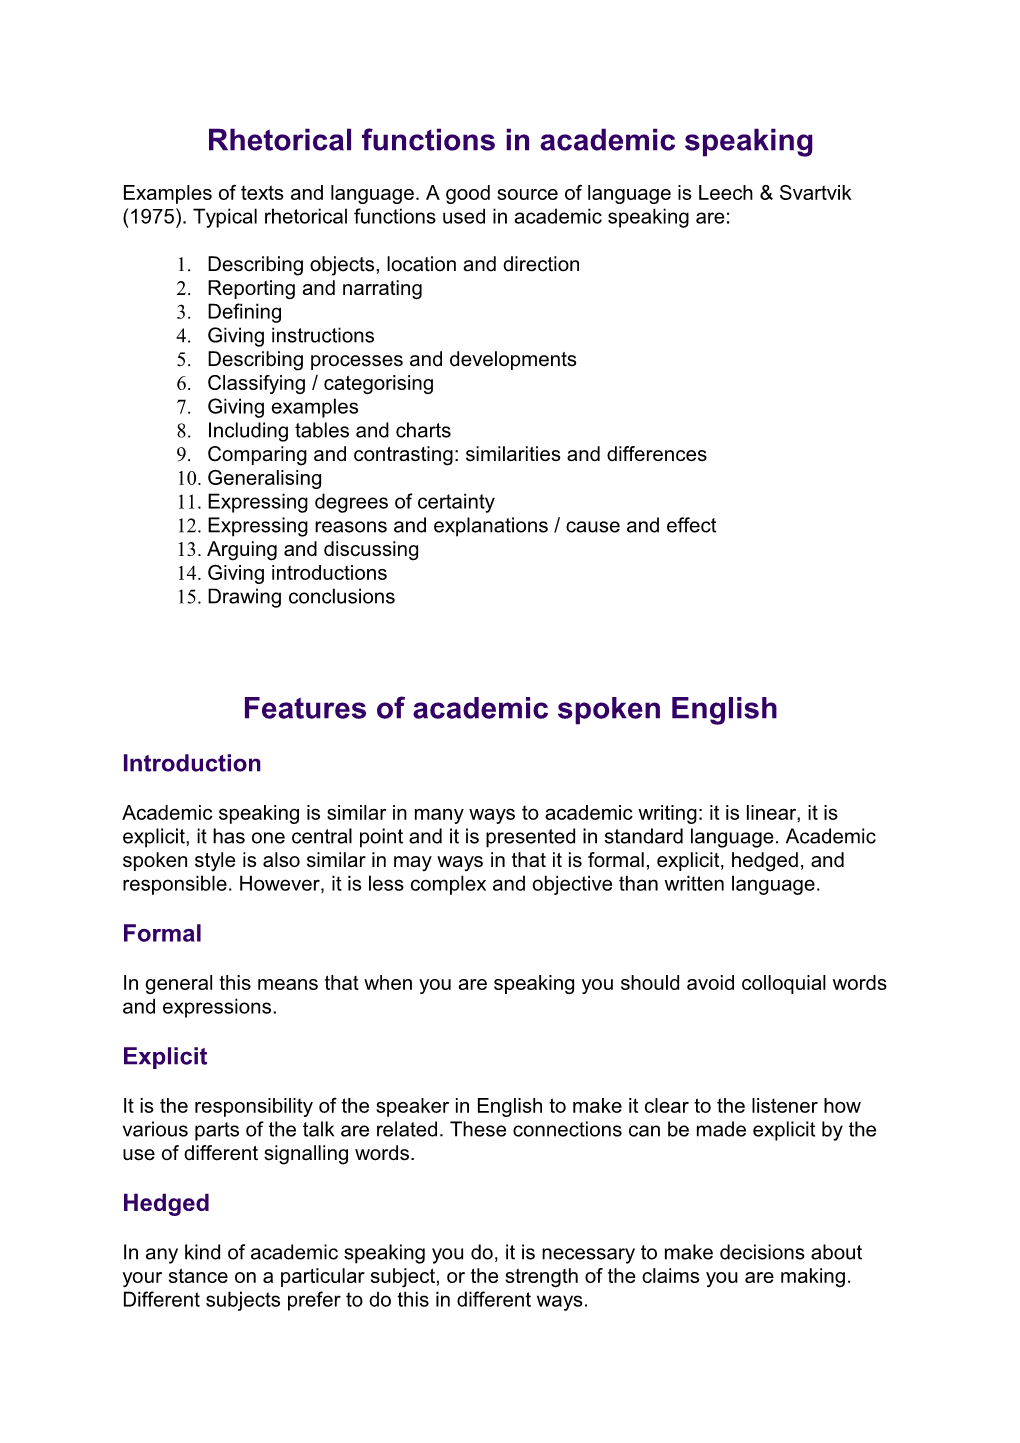 Features of Academic Spoken English